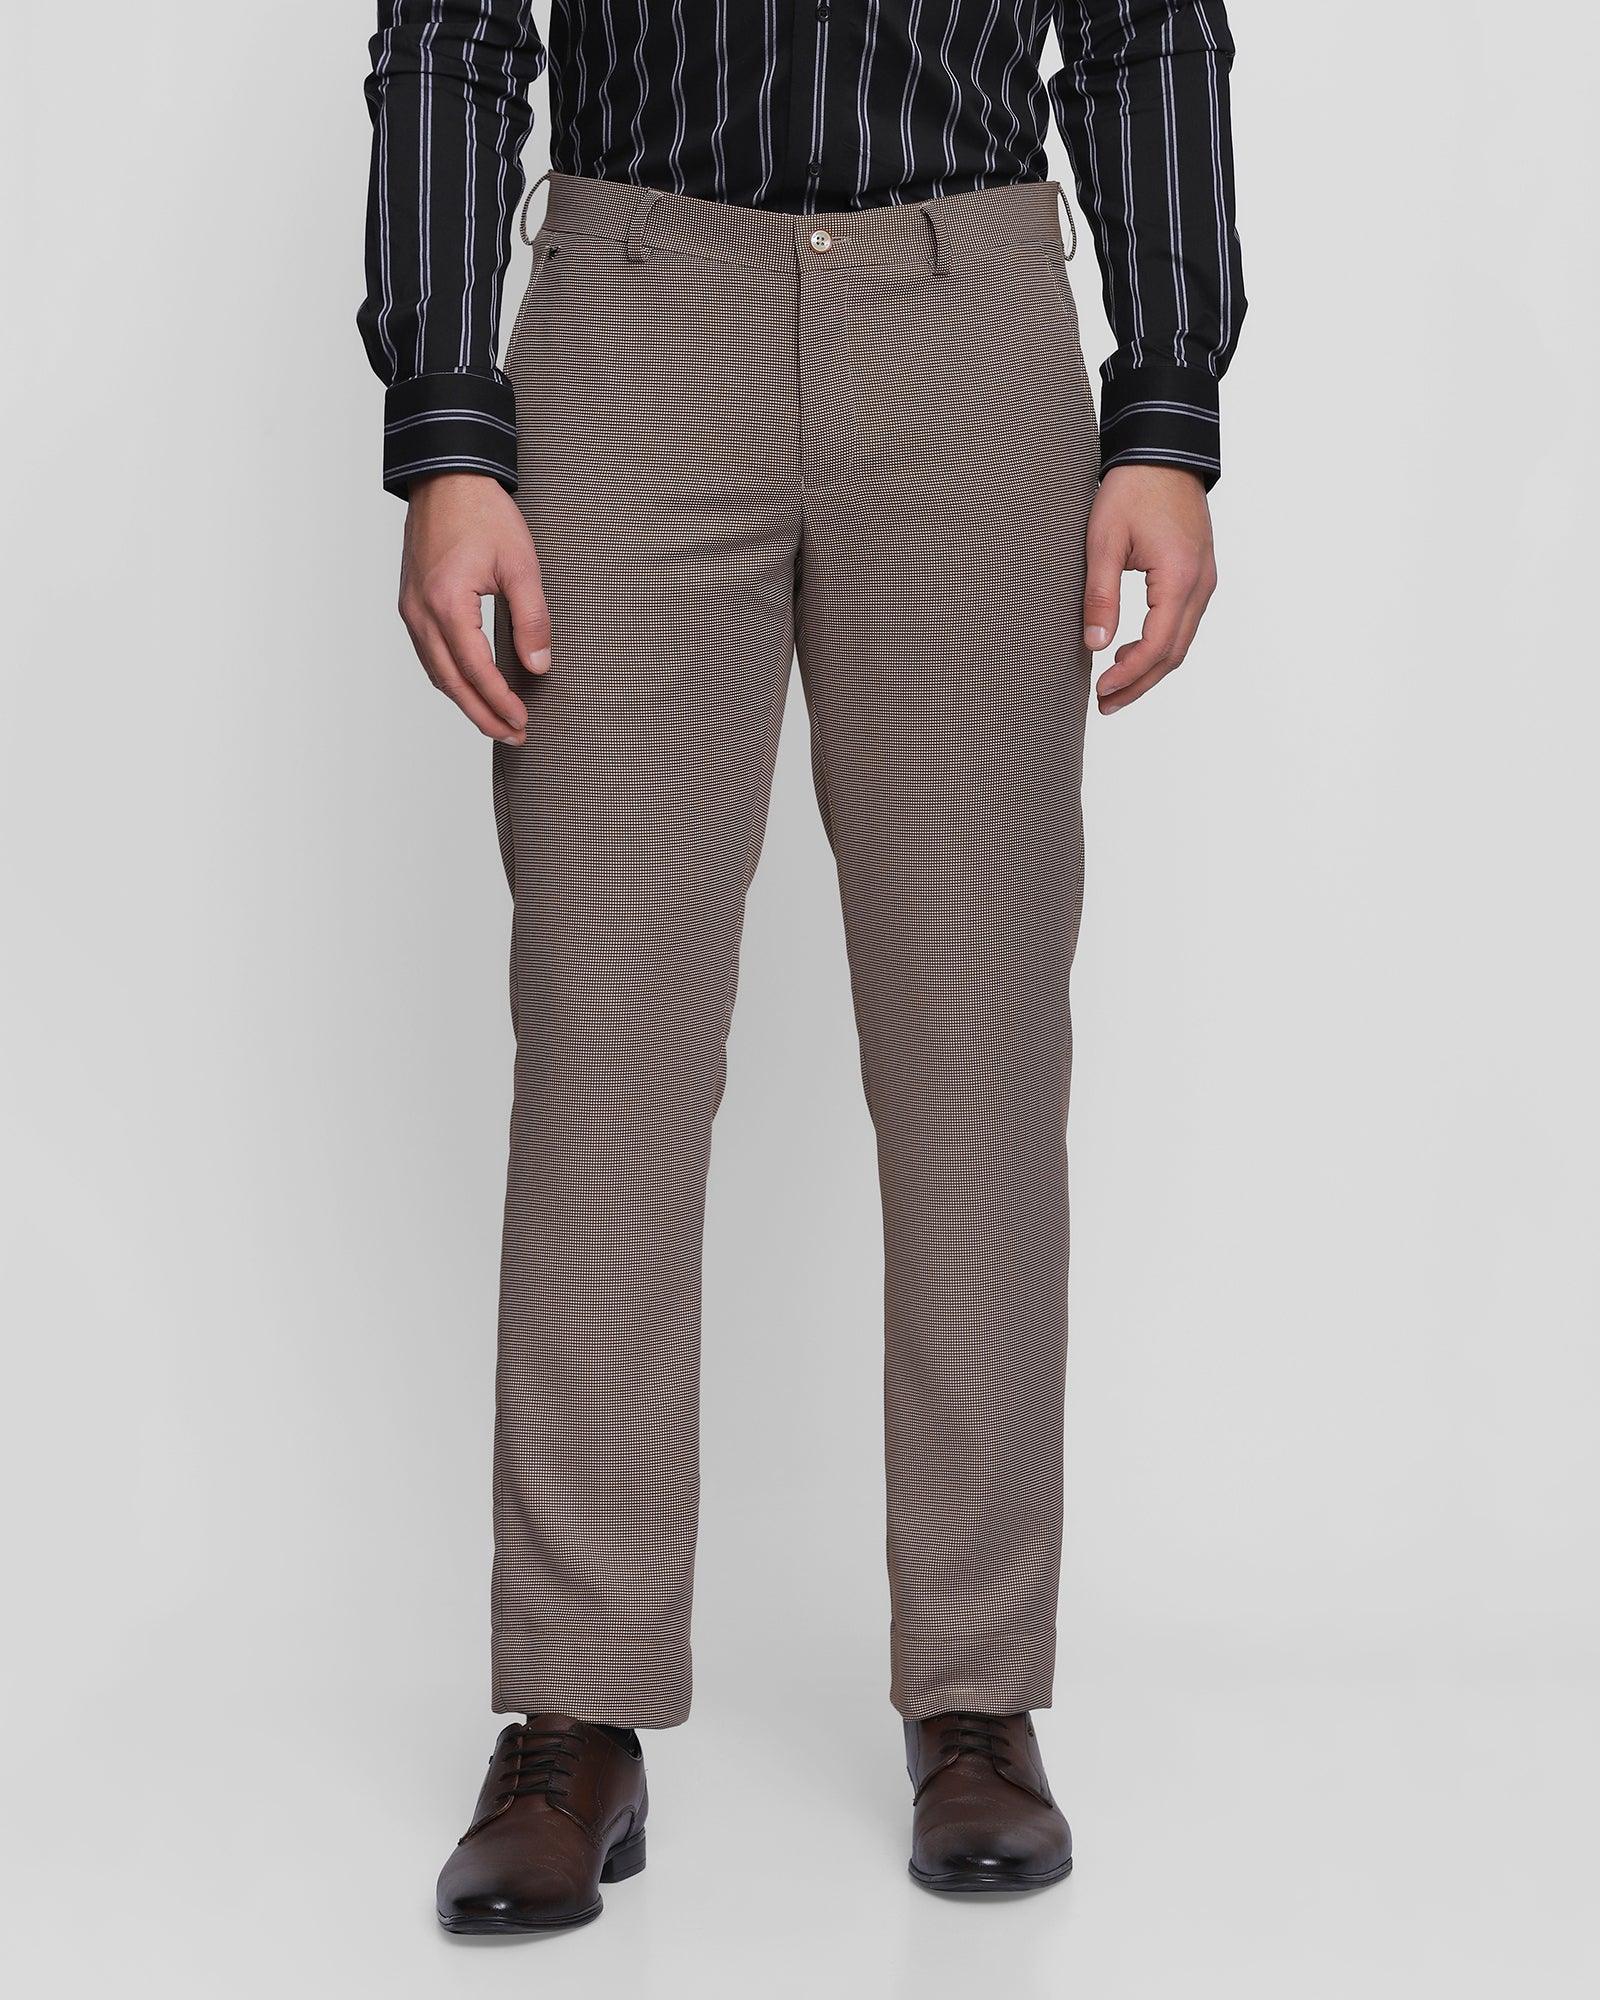 Slim Comfort B-95 Formal Beige Textured Trouser - Andis